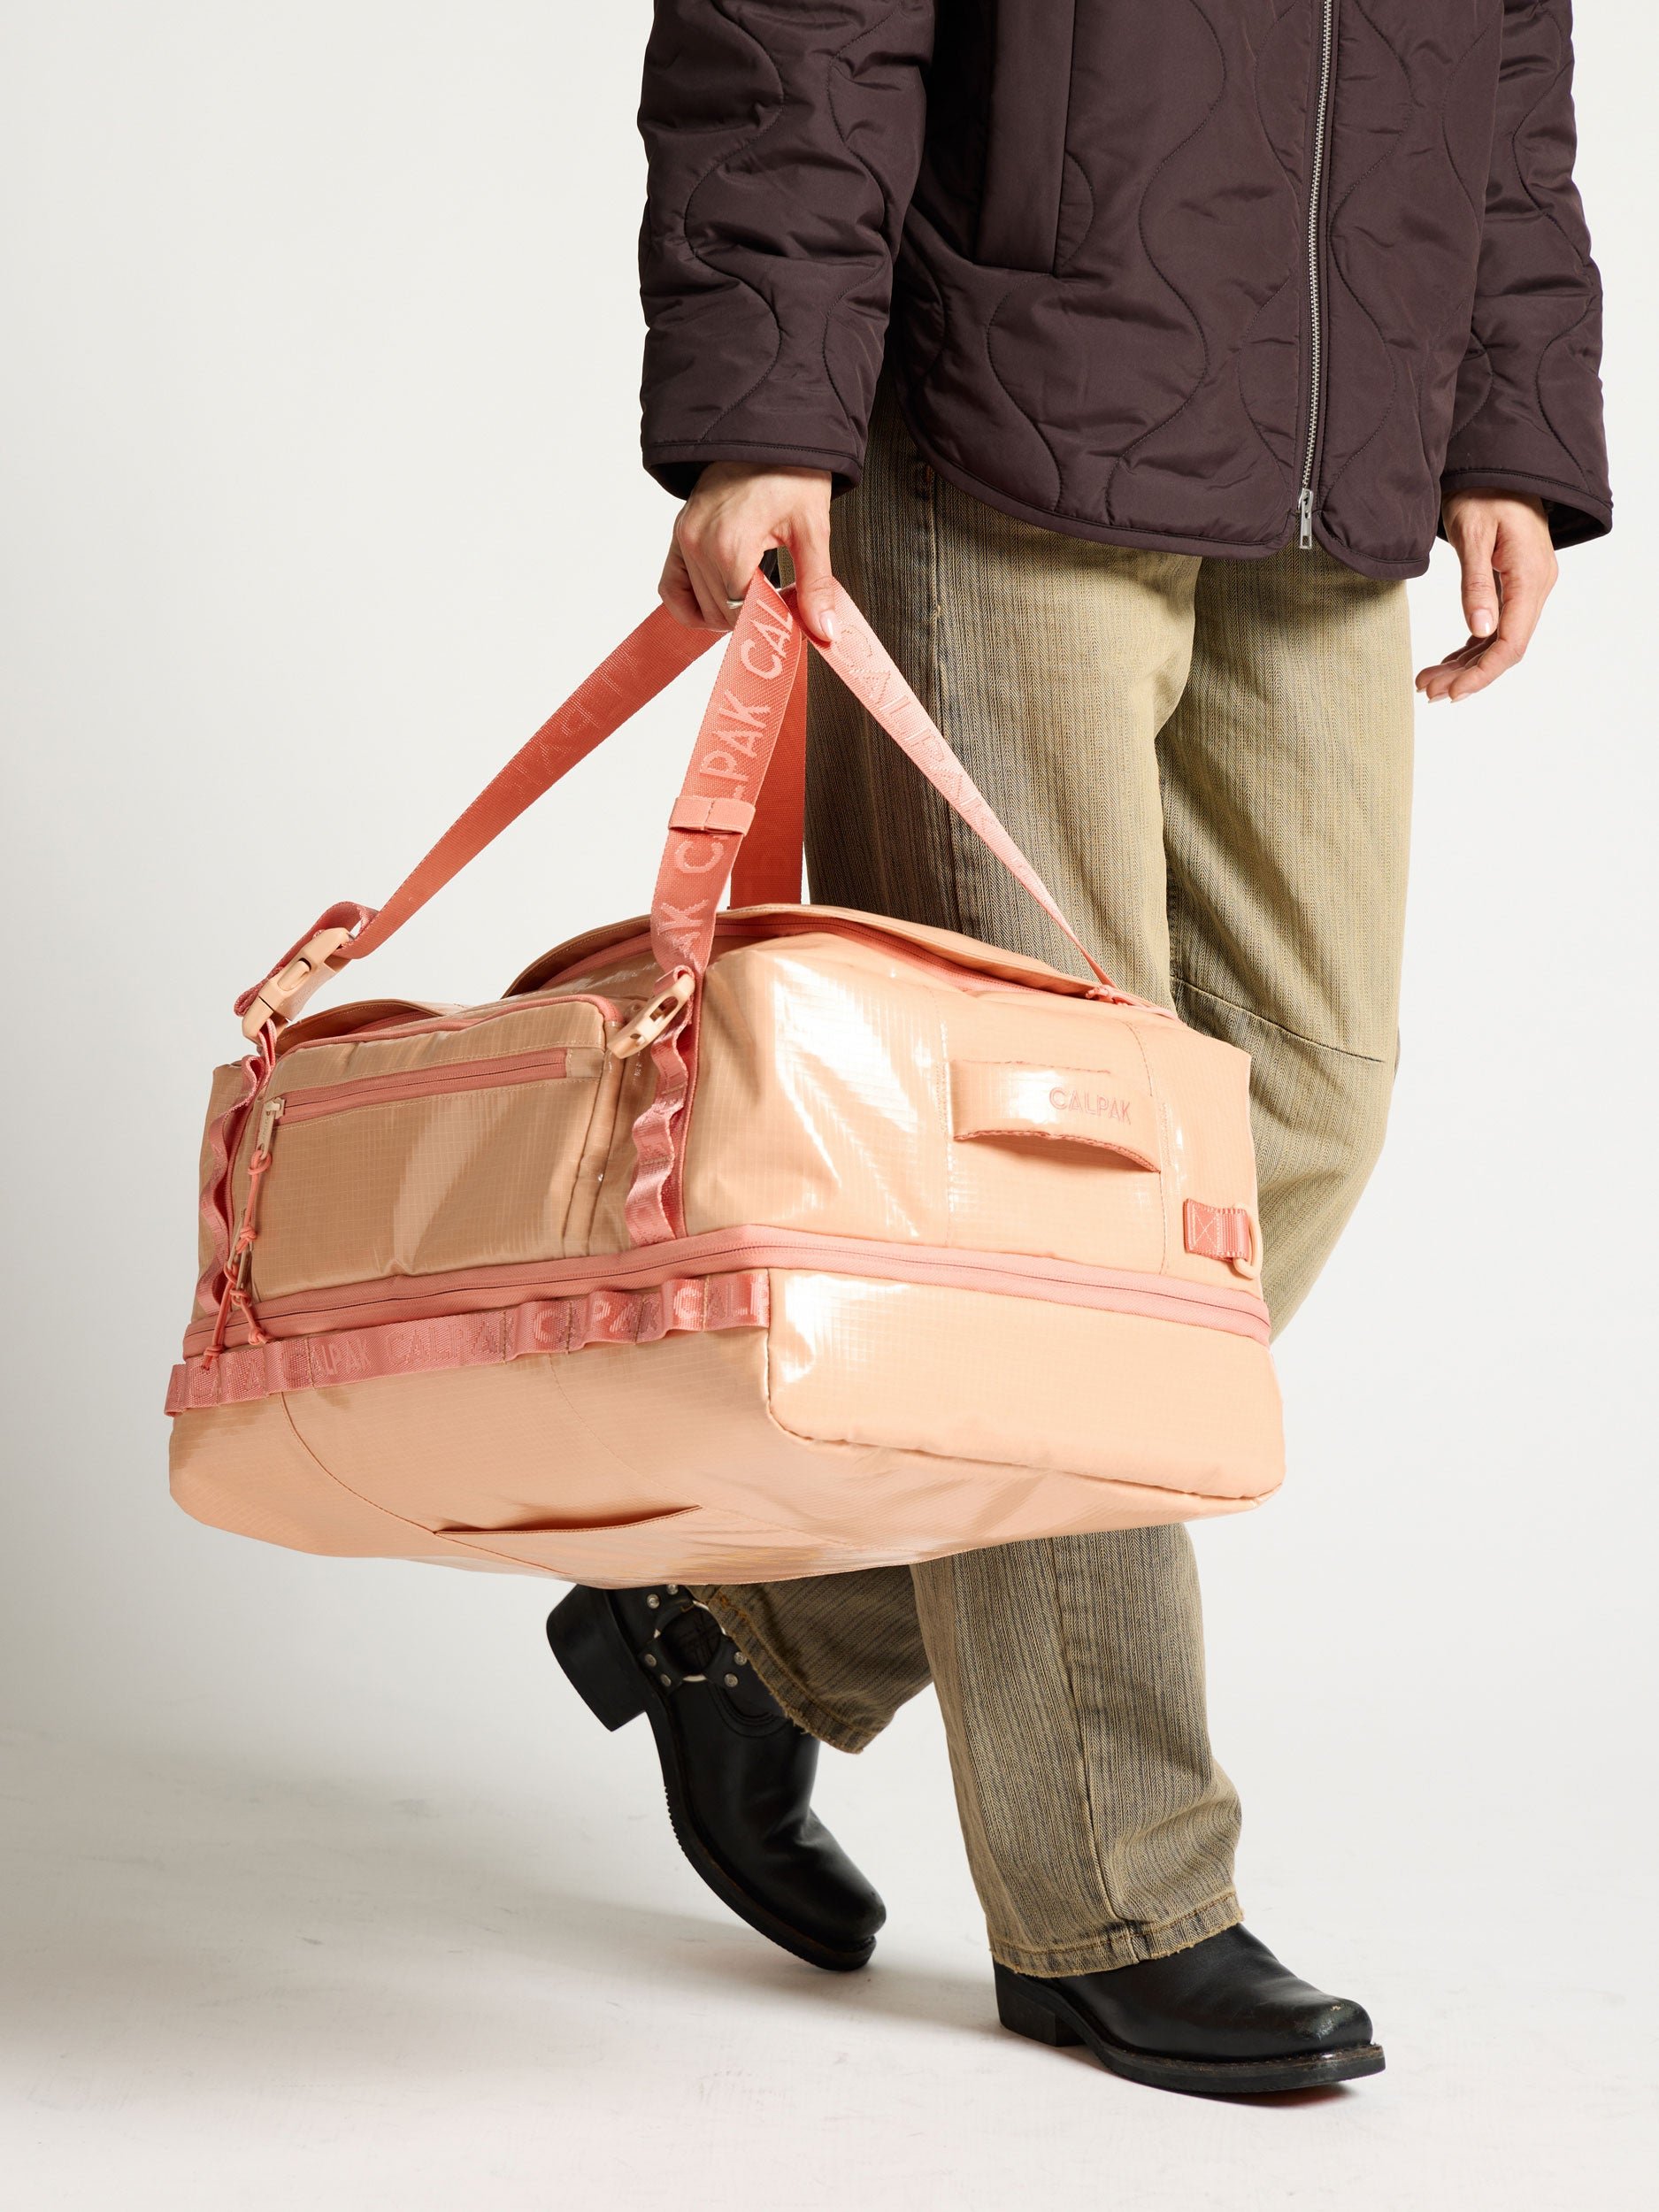 Model holding terra large 50L duffel backpack as duffel bag in orange canyon